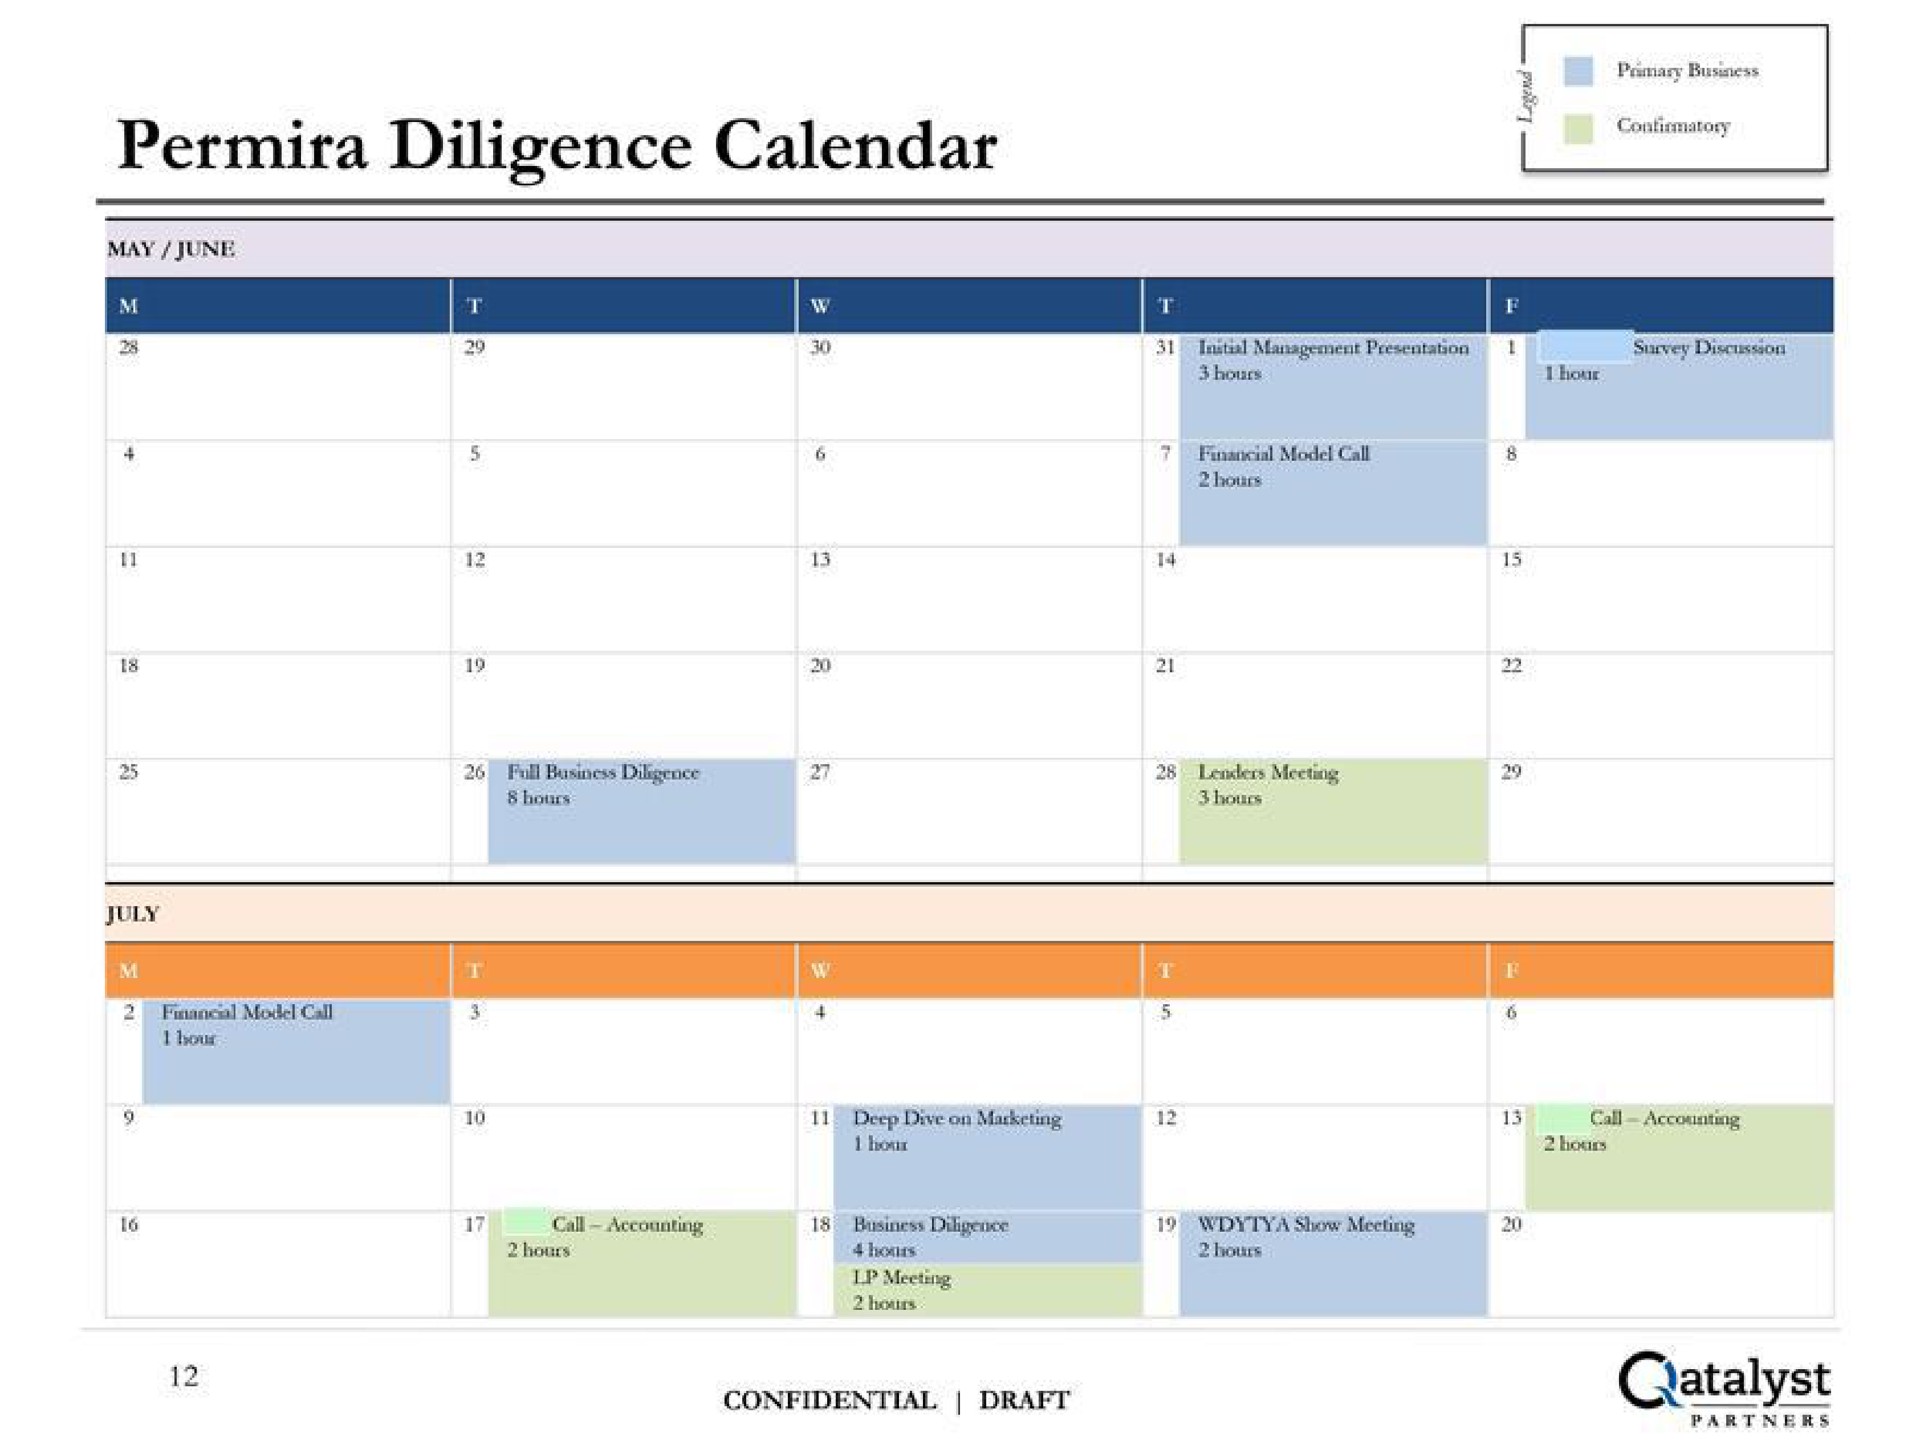 diligence calendar | Qatalyst Partners